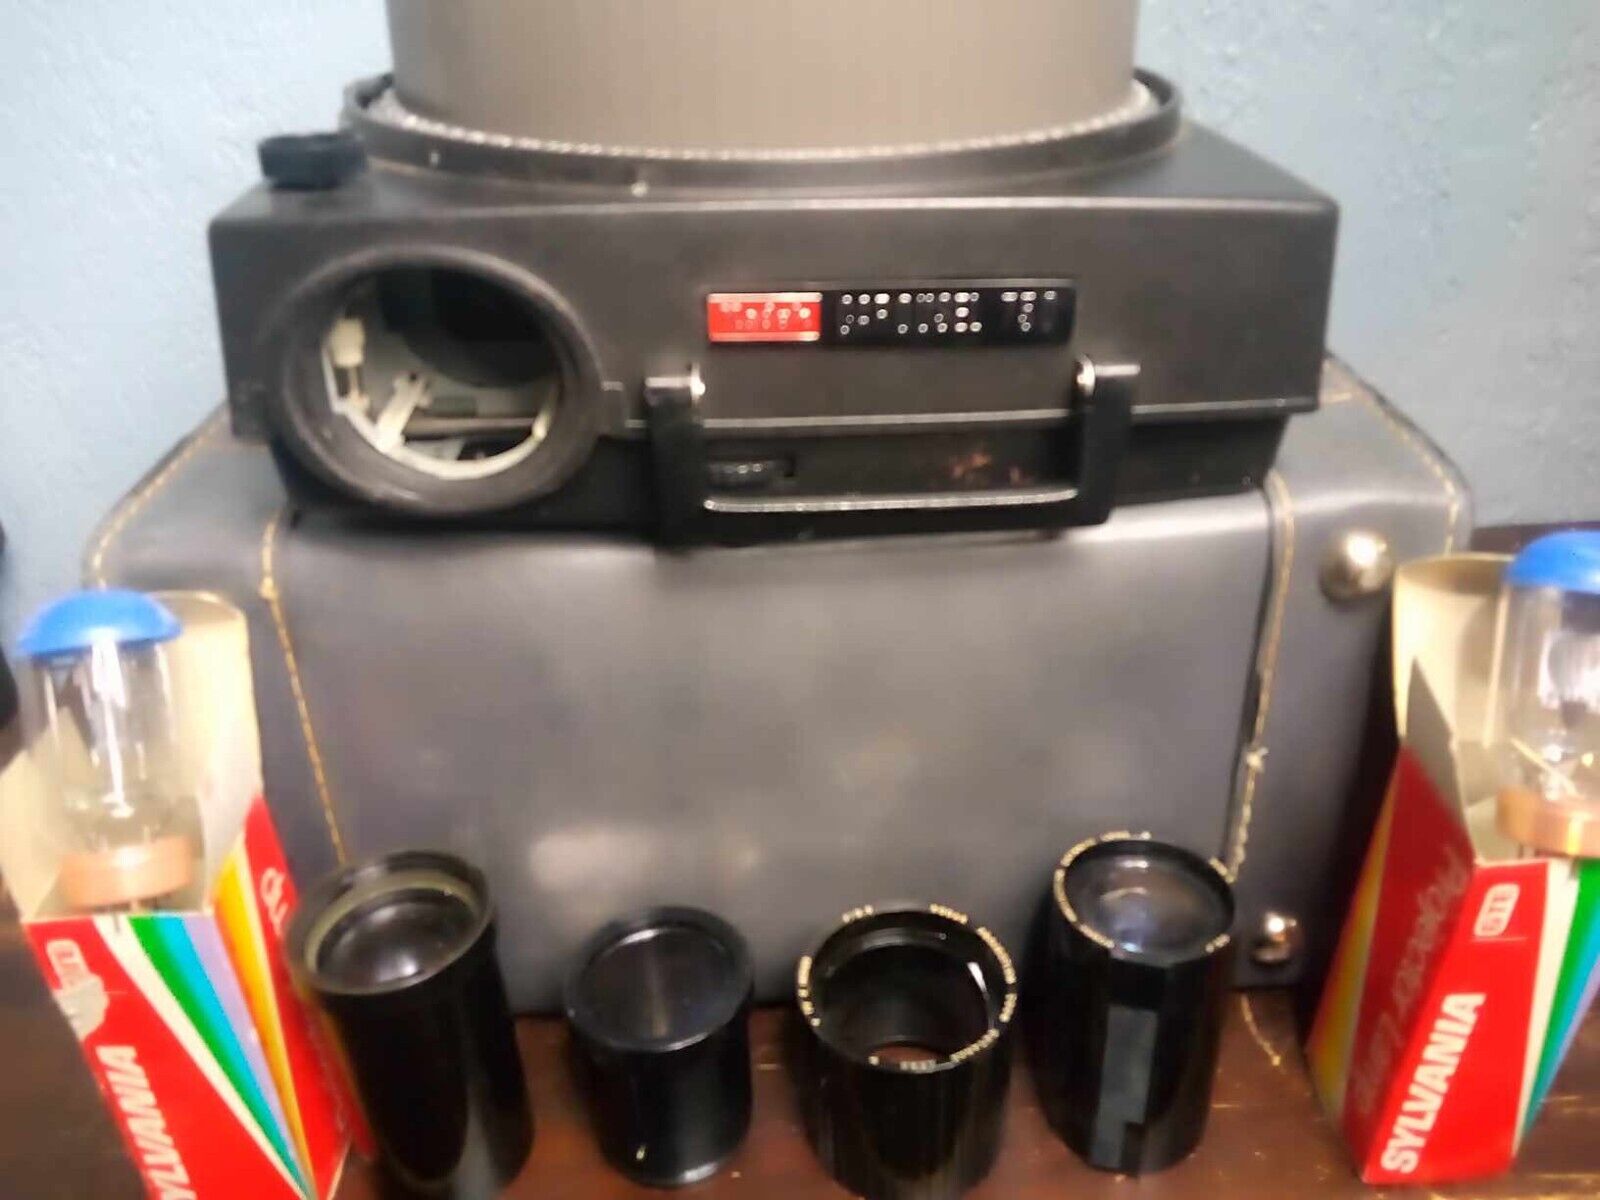 Vintage Kodak Carousel 750 Film Projector W/ Case, Remote, & Lenses (Working)